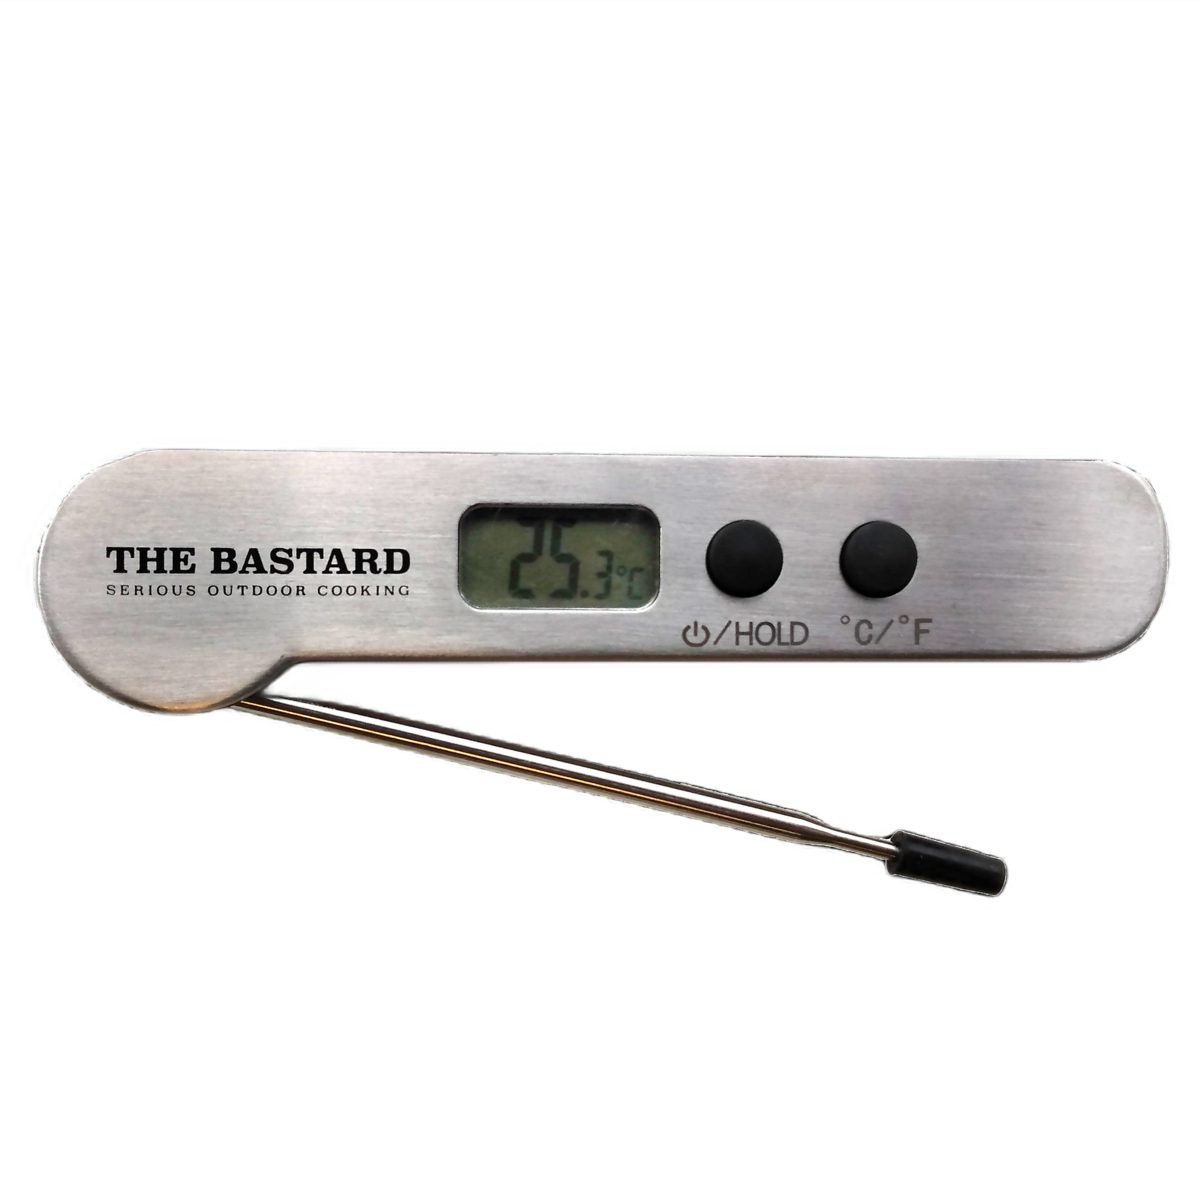 The Bastard Core Thermometer Pro - www.bbqkopen.nl